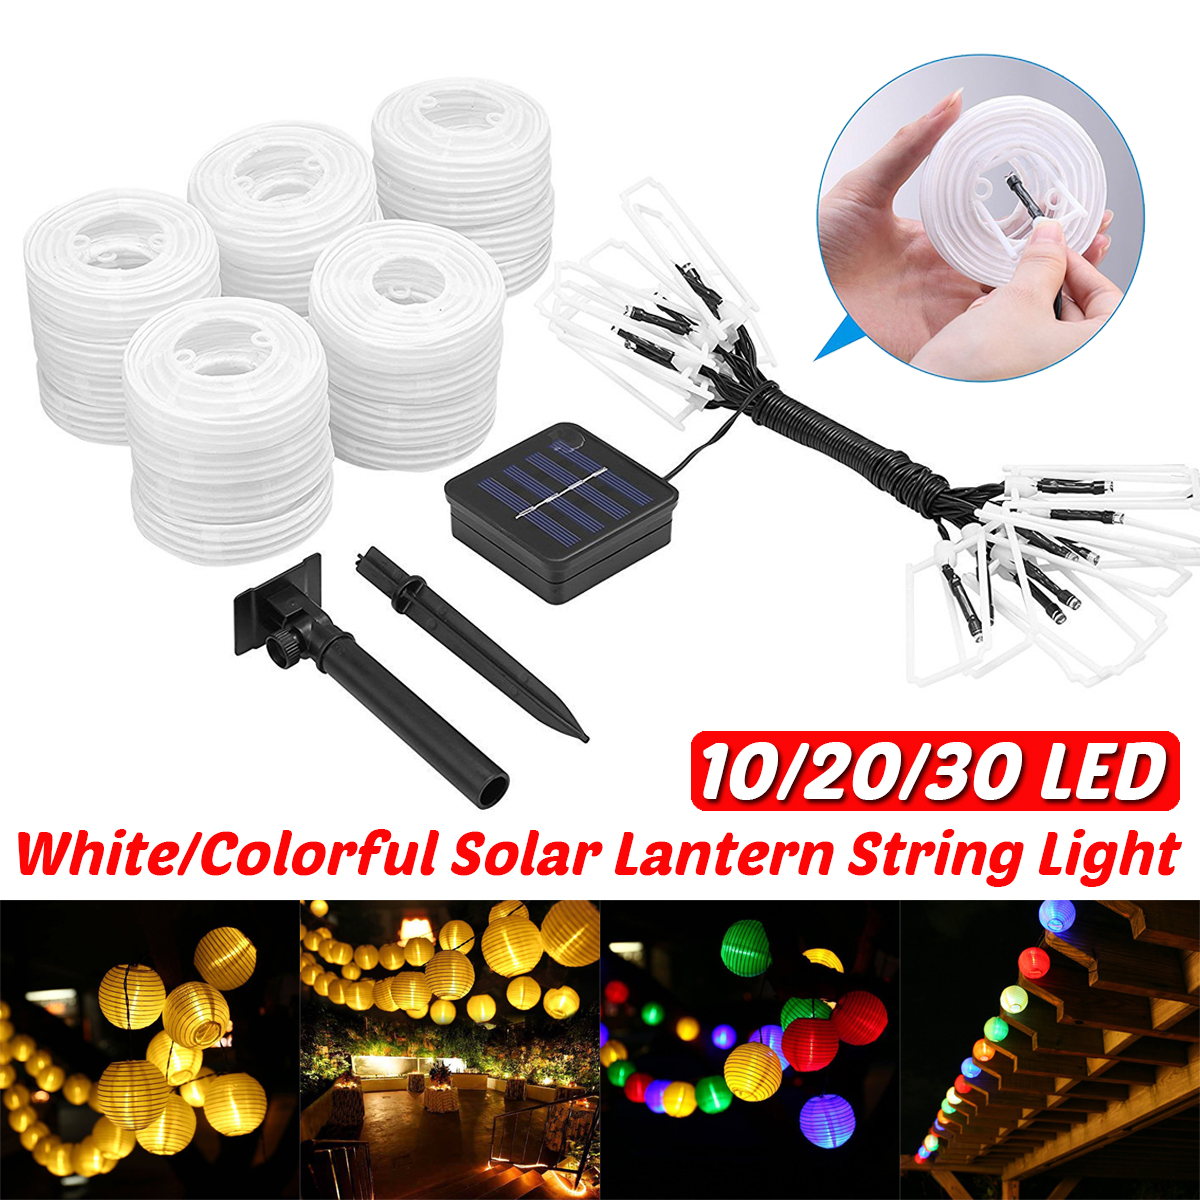 Outdoor-Lantern-Solar-String-Fairy-Lights-102030-LED-For-Party-Wedding-Decor-1723583-1